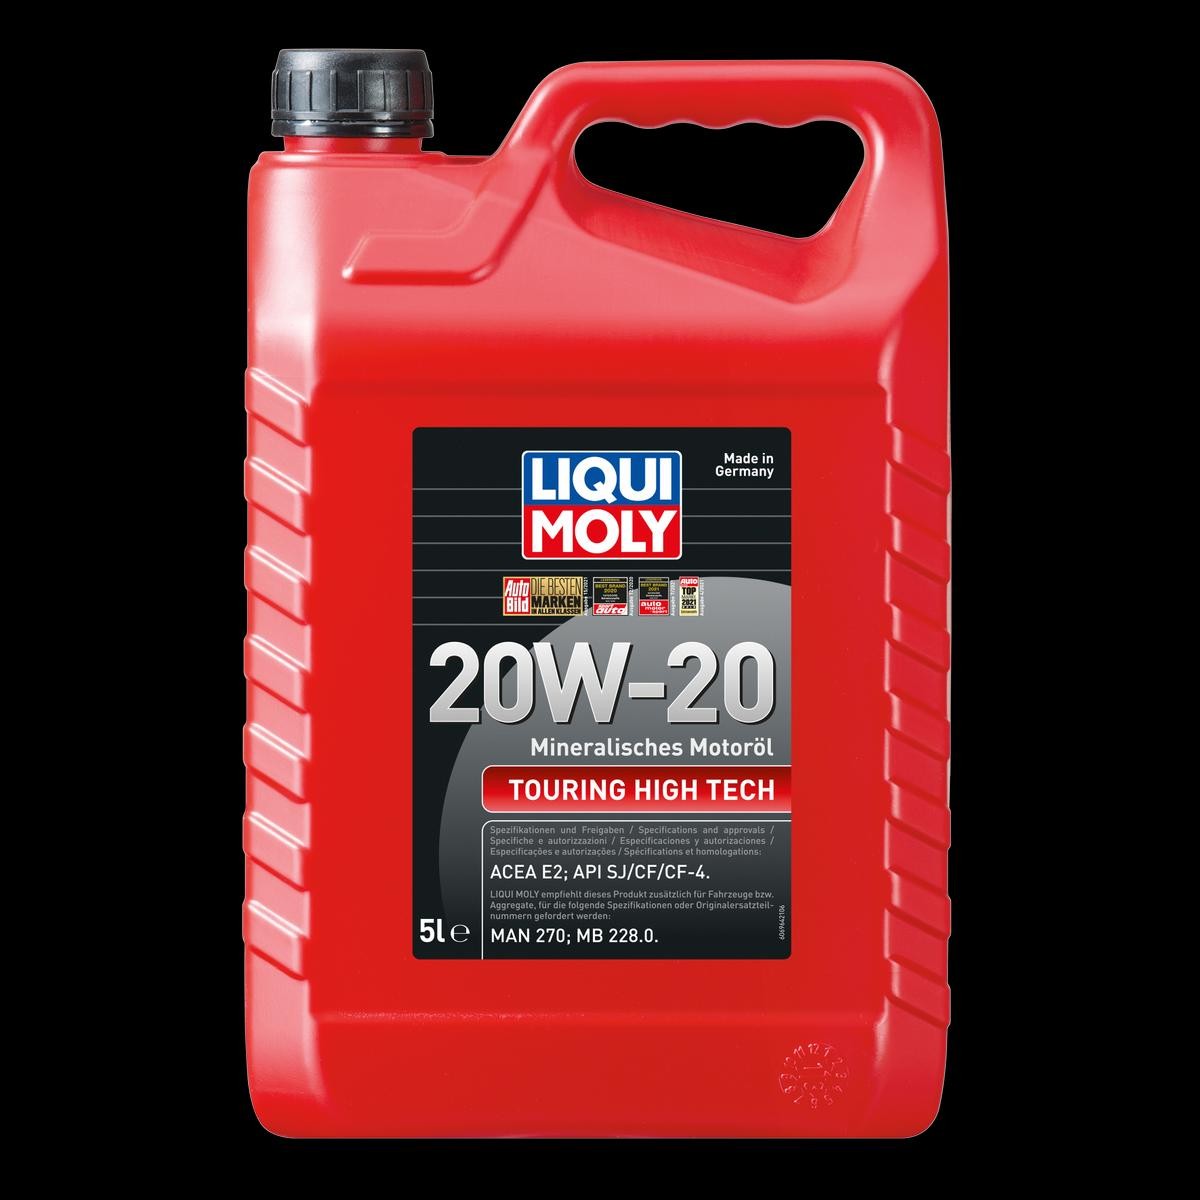 Car oil LIQUI MOLY 20W-20, 20l, Mineral Oil longlife 6965